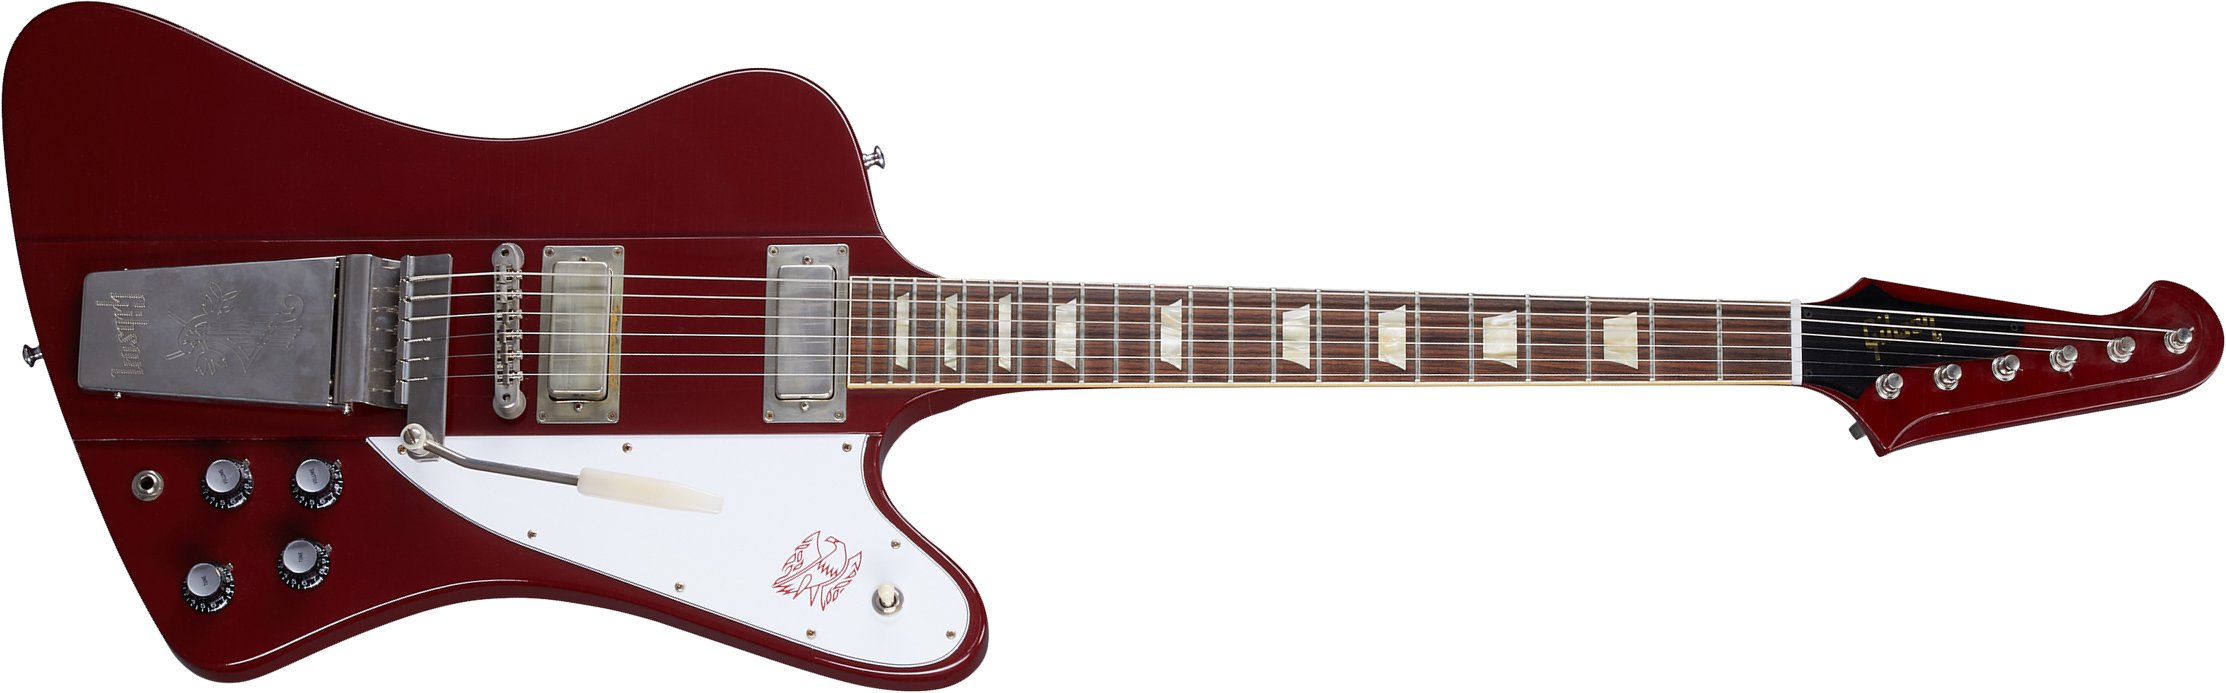 Gibson Custom Shop Murphy Lab Firebird 1963 Maestro Reissue Trem 2mh Rw - Light Aged Cardinal Red - Retro rock electric guitar - Main picture